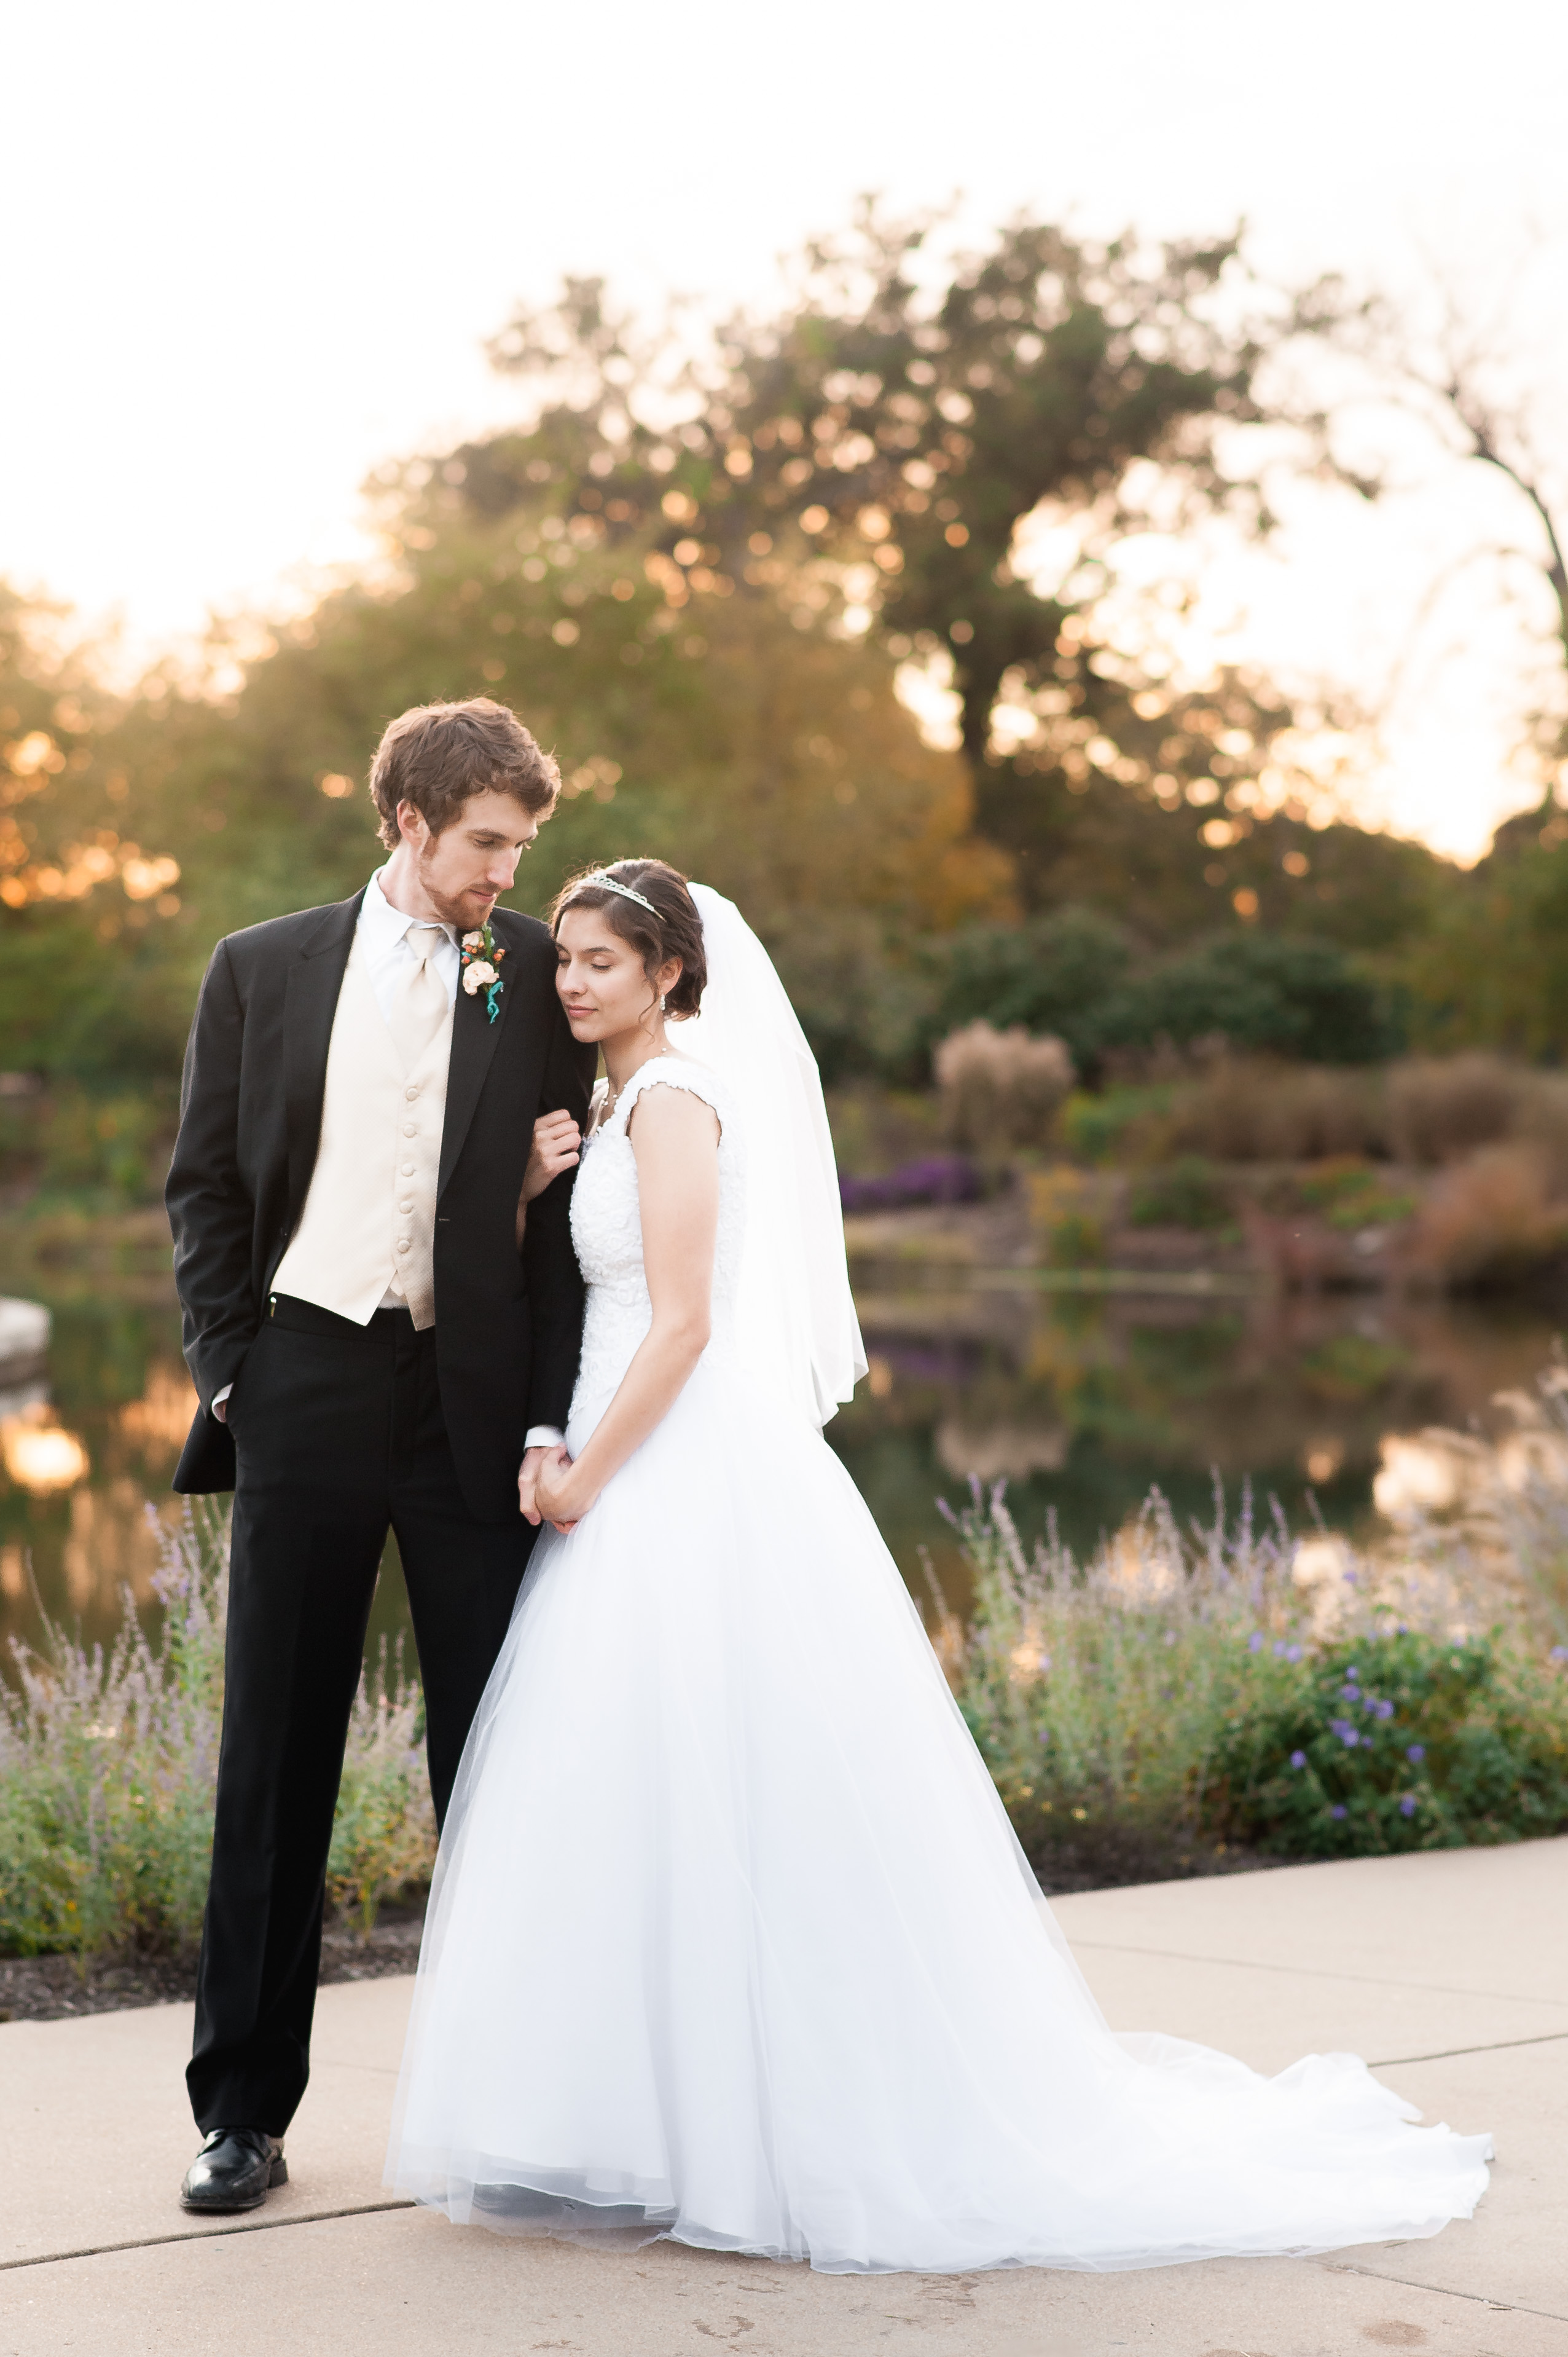 Hannah & Nick | Married | 10.11.2014